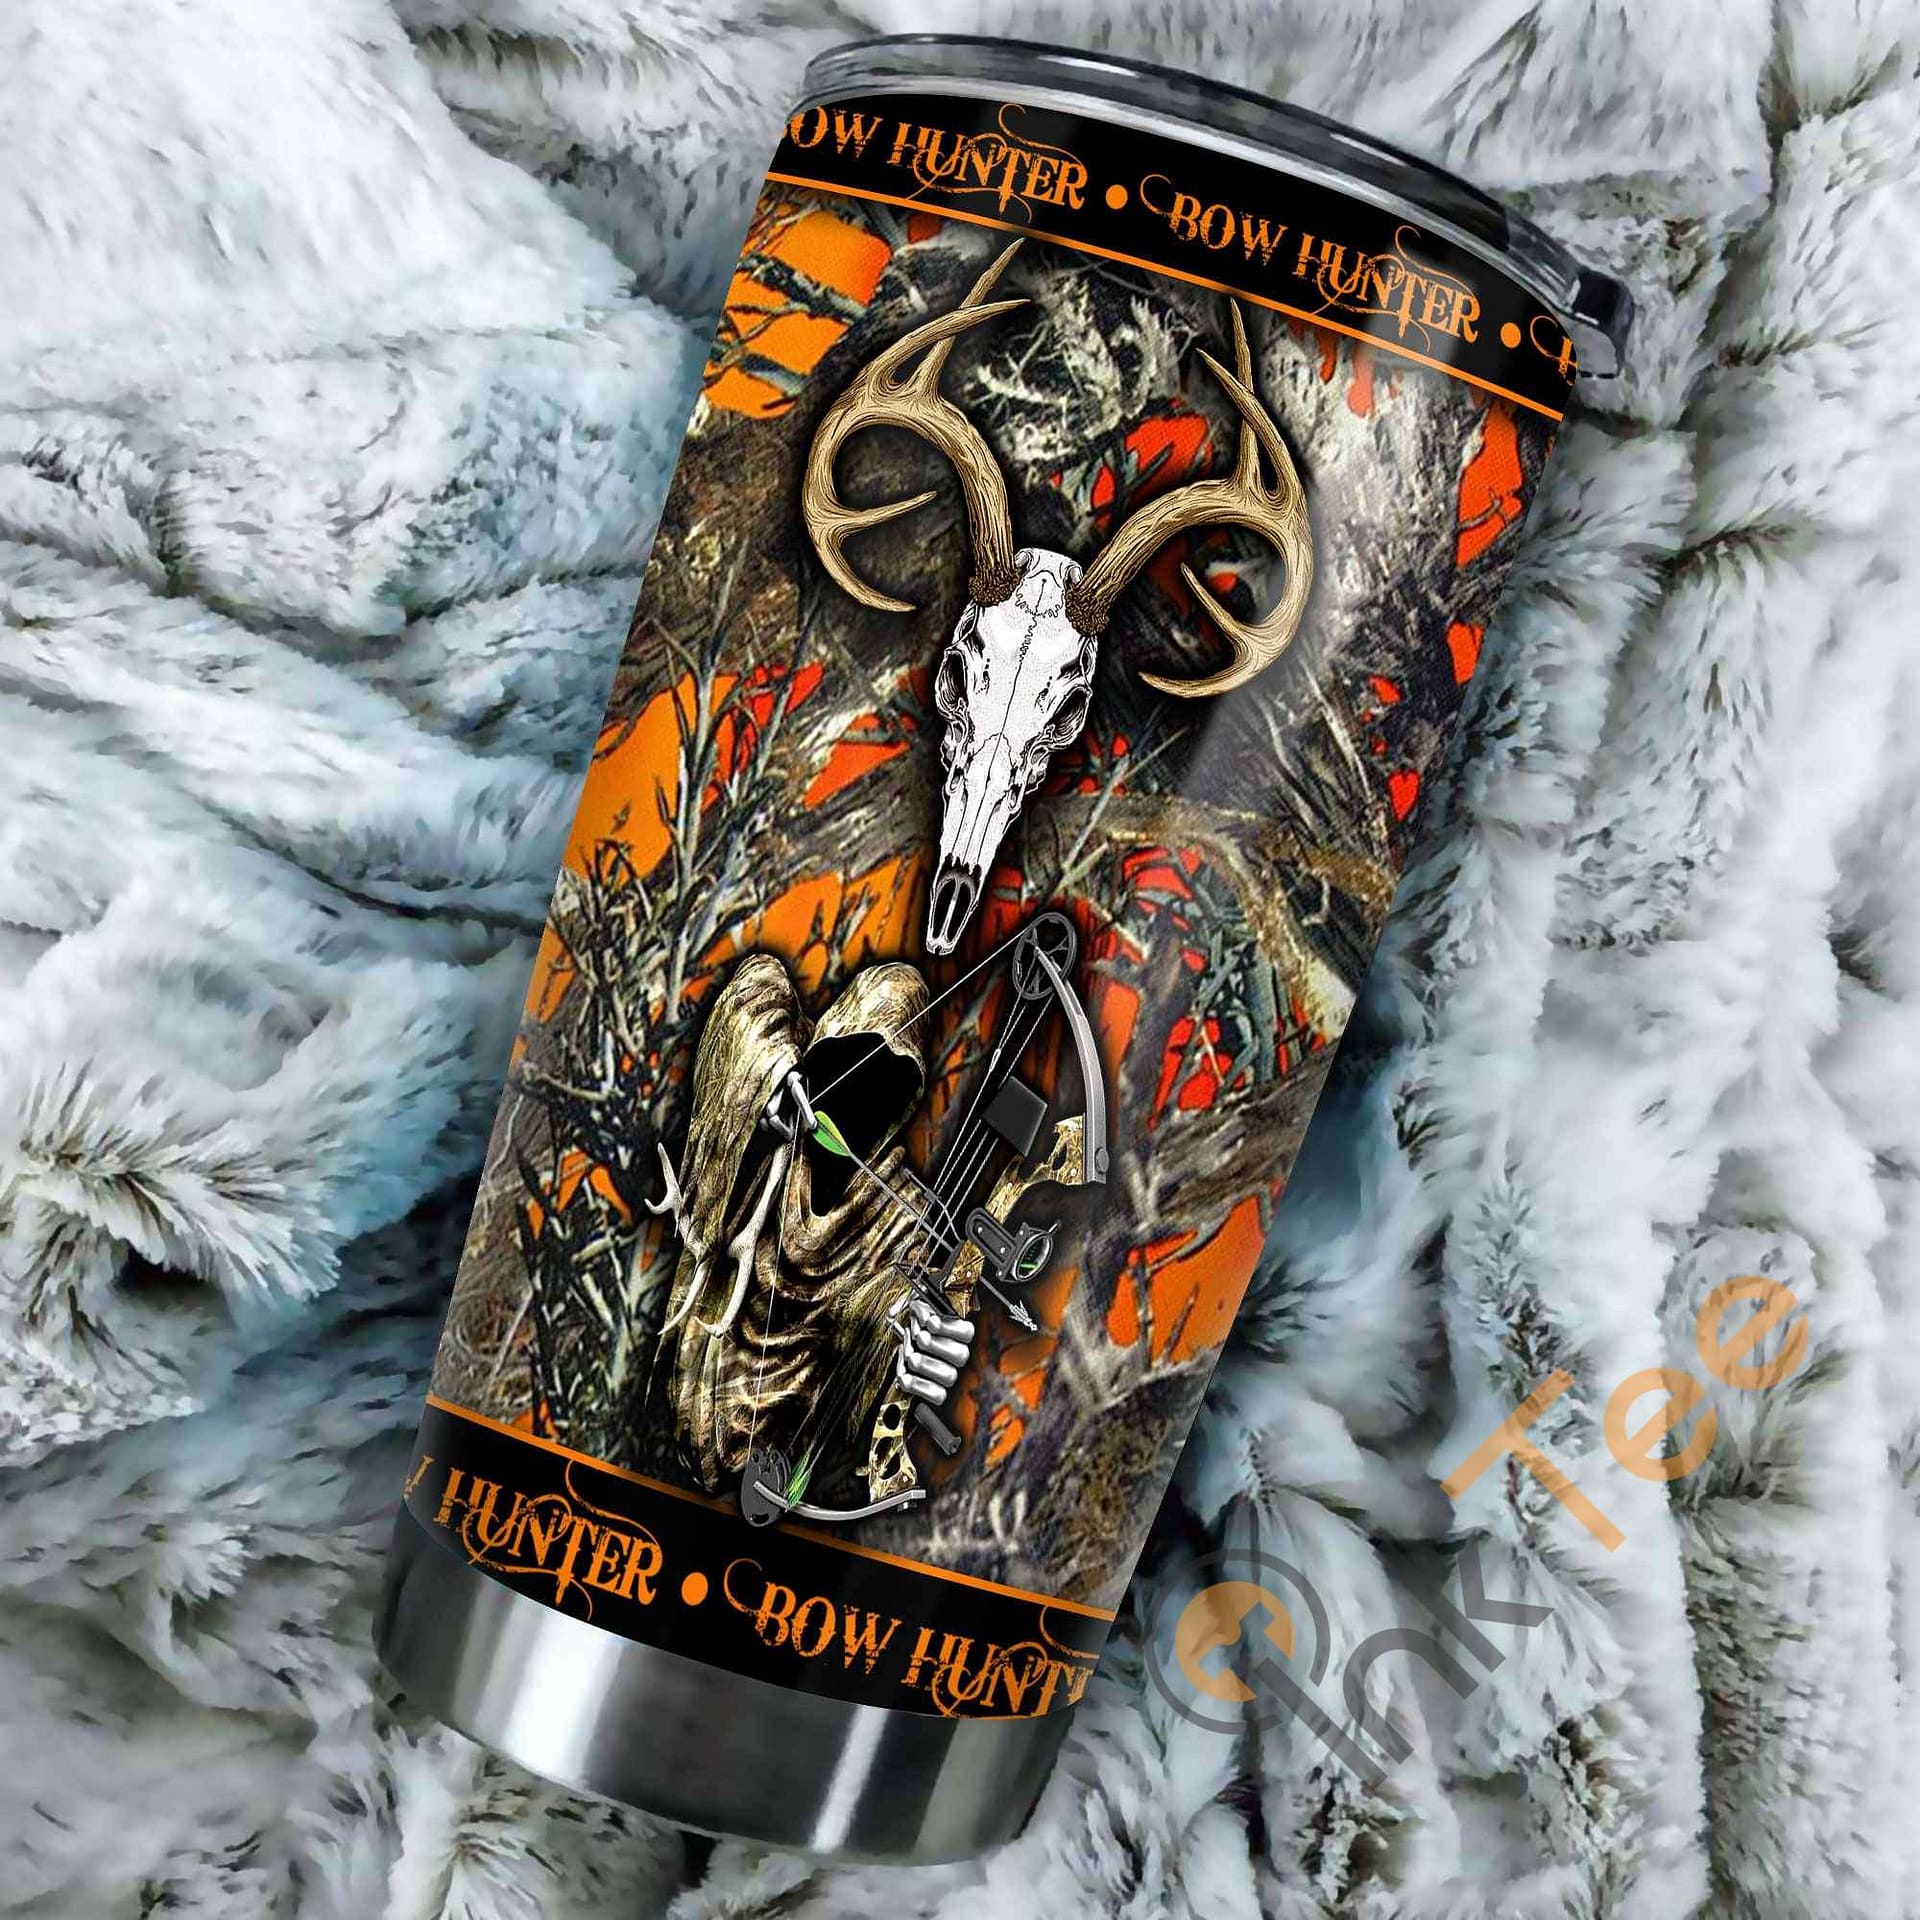 Grim Reaper Bow Hunter Camo Amazon Best Seller Sku 2789 Stainless Steel Tumbler